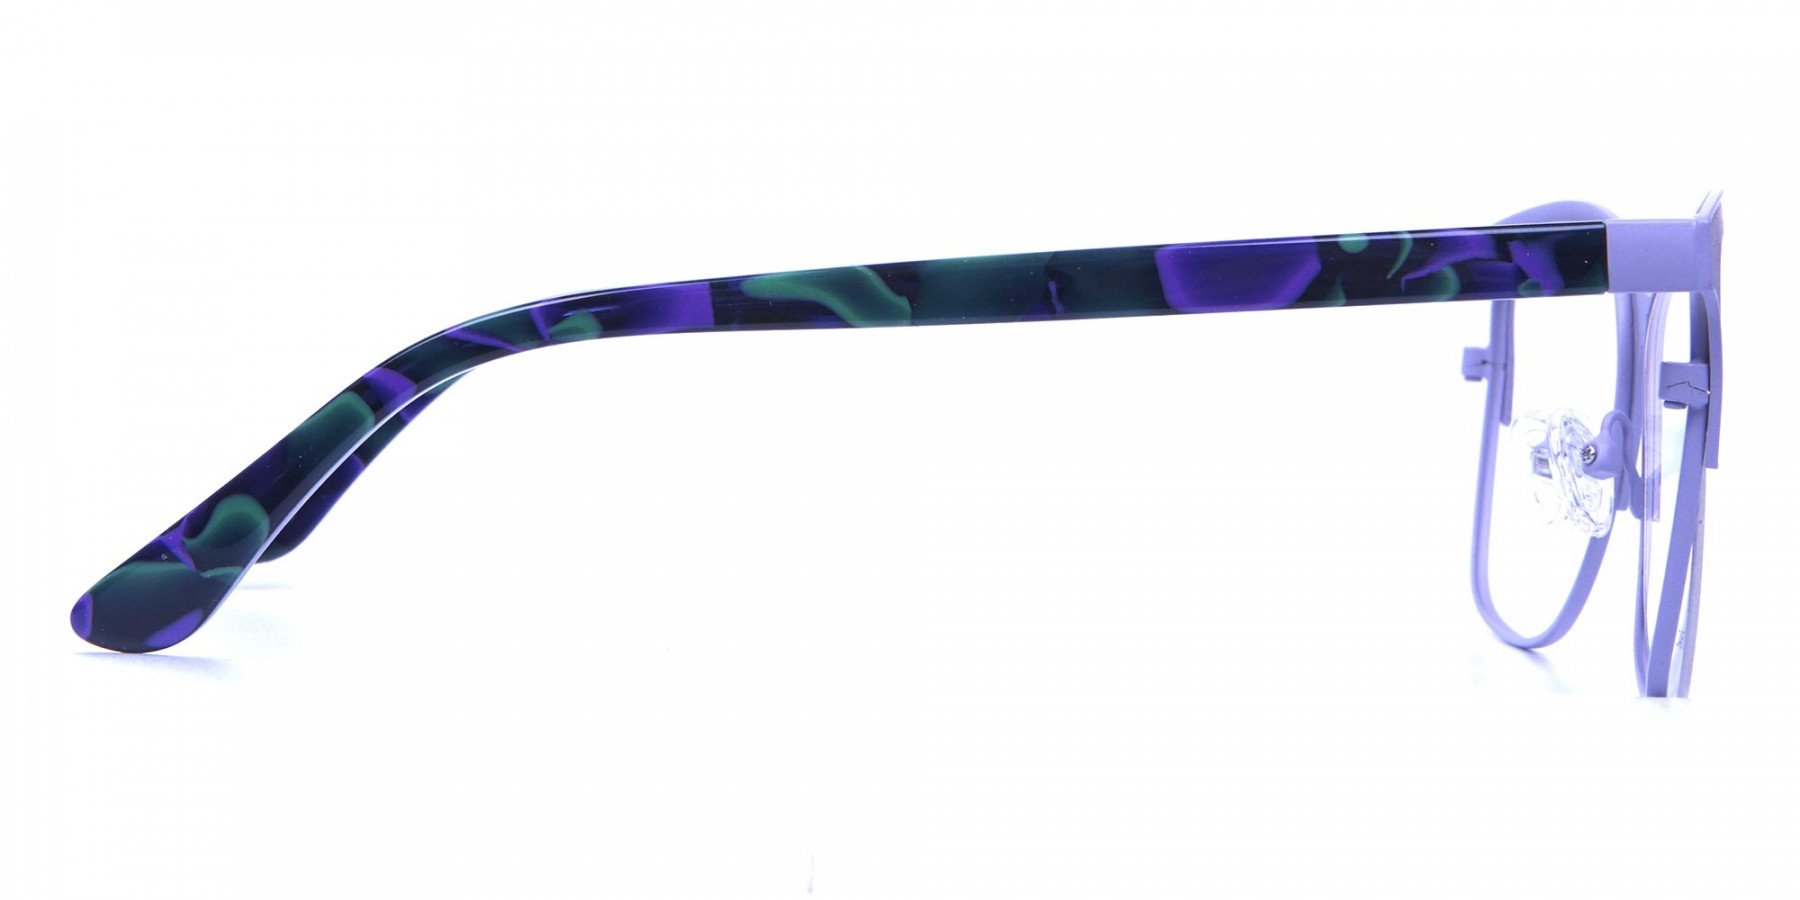 Violet & Aurora Green Dual Tone Glasses